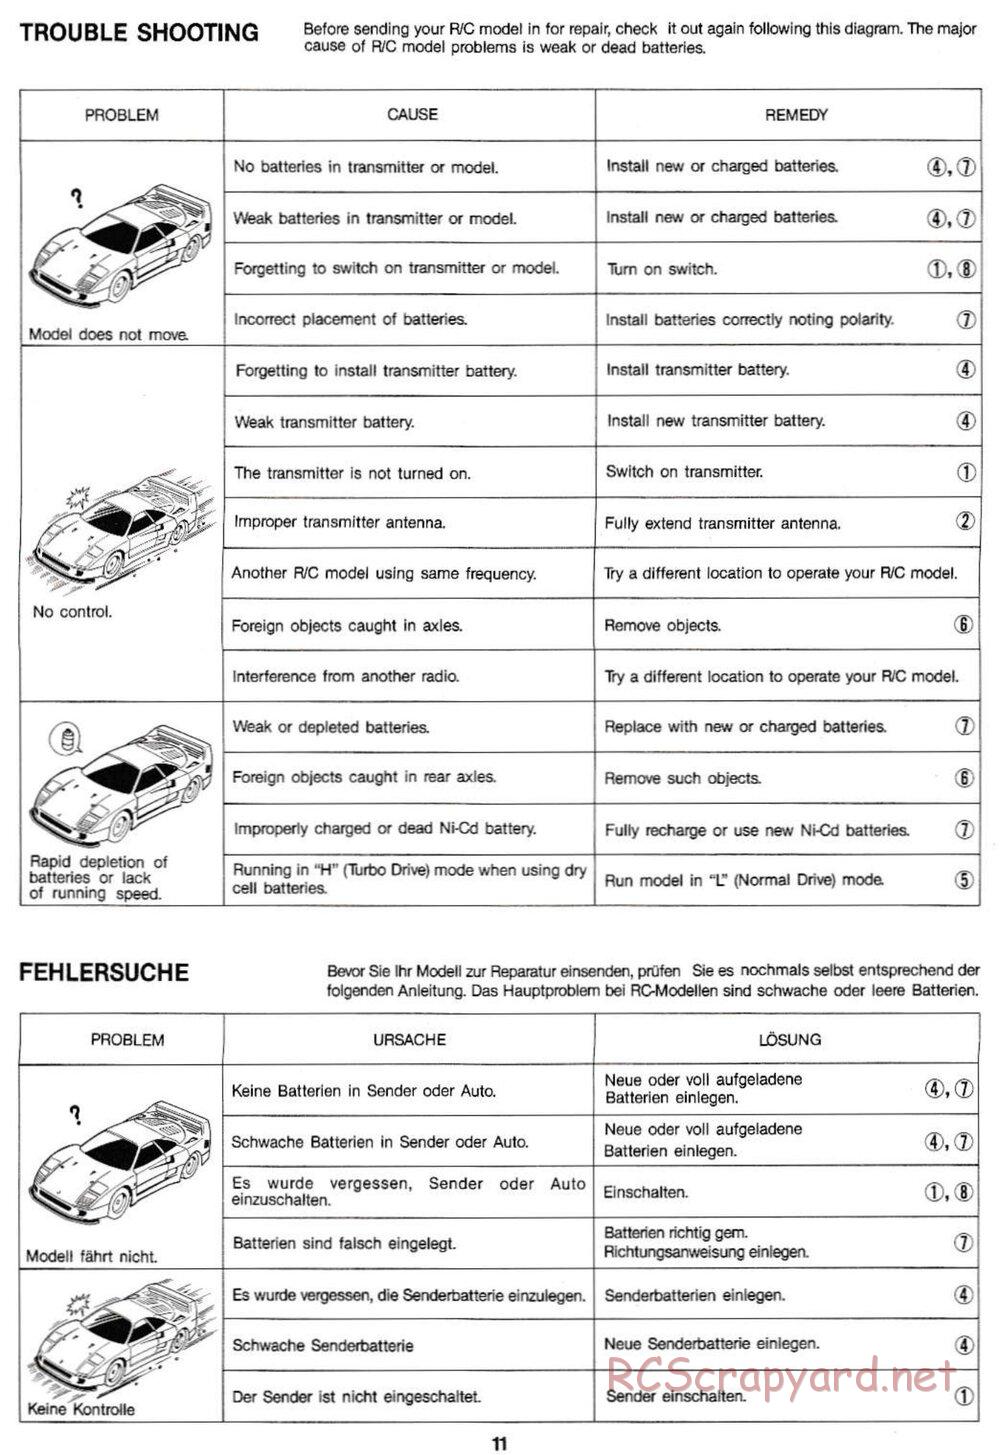 Tamiya - Ferrari F40 QD Chassis - Manual - Page 11